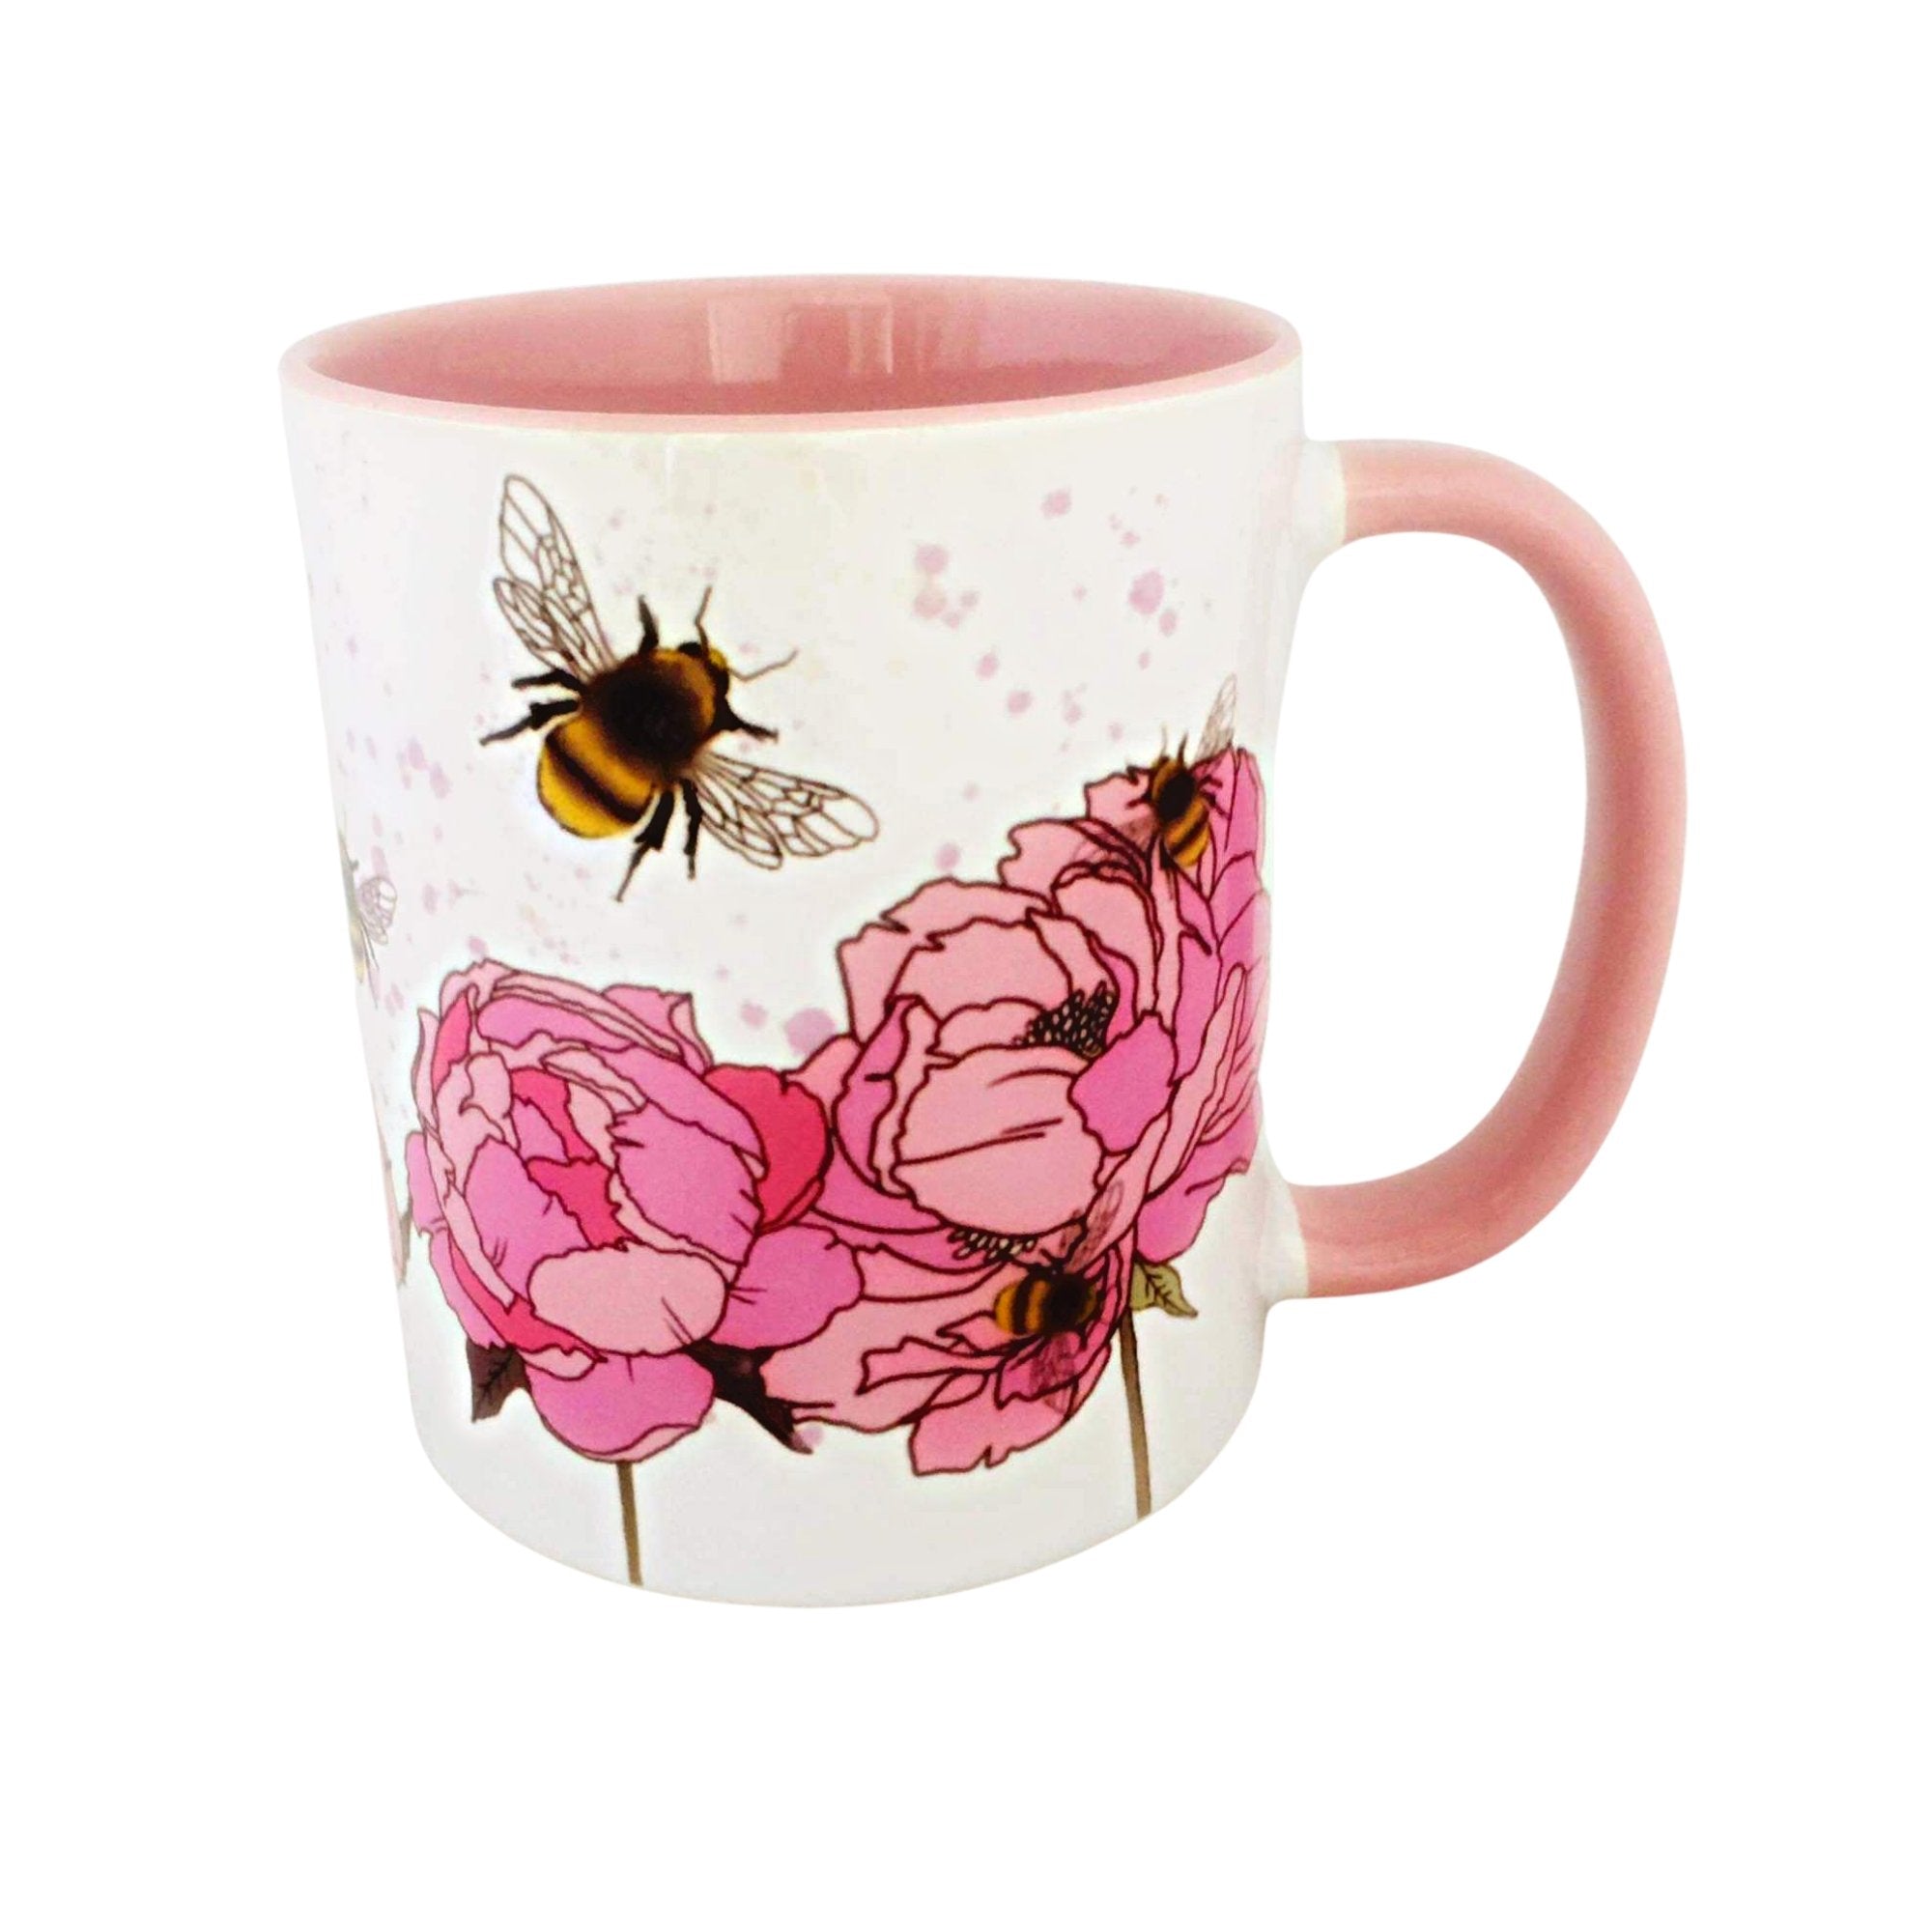 Sarah McAlpine Art Bees on Peonies mug - Beautiful Gifts - Packaged with Love